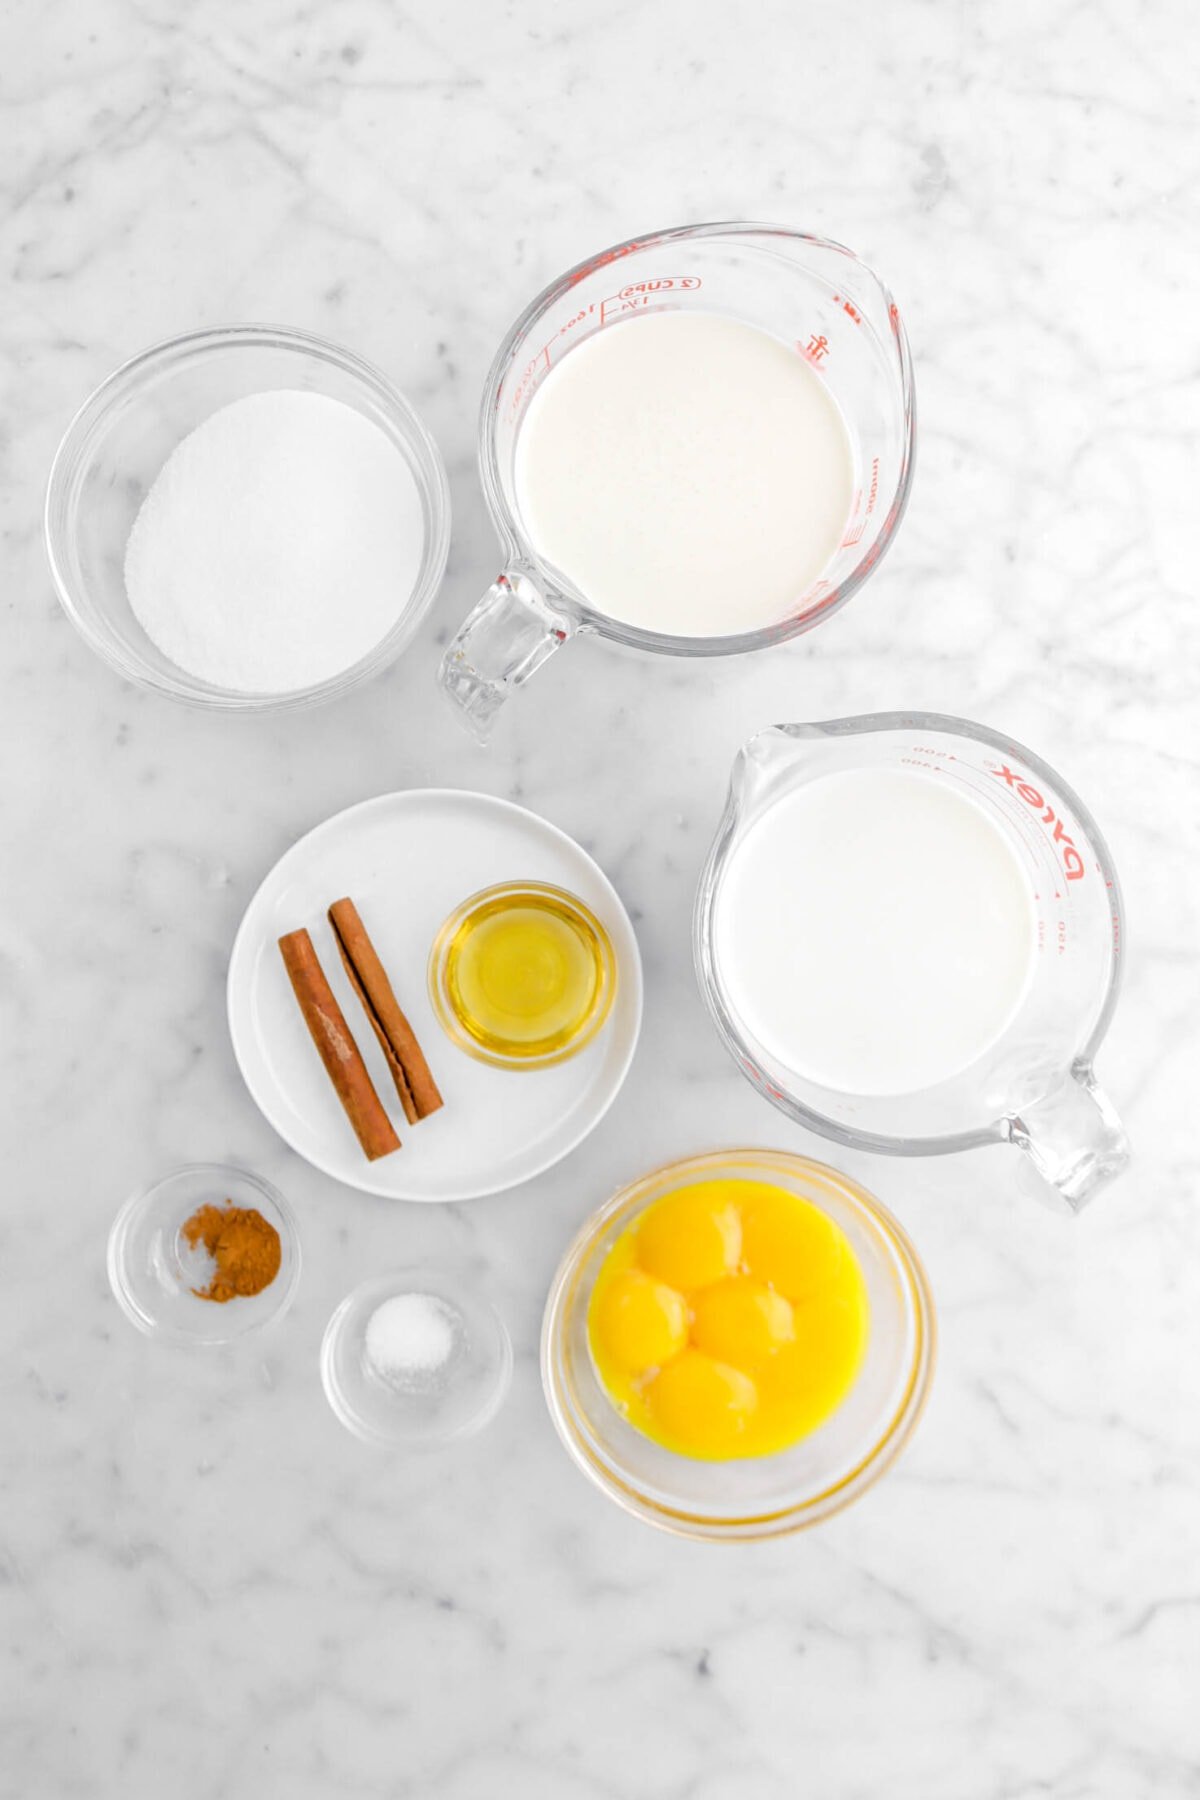 sugar, heavy cream, milk, agave, two cinnamon sticks, ground cinnamon, salt, and egg yolks on marble surface.